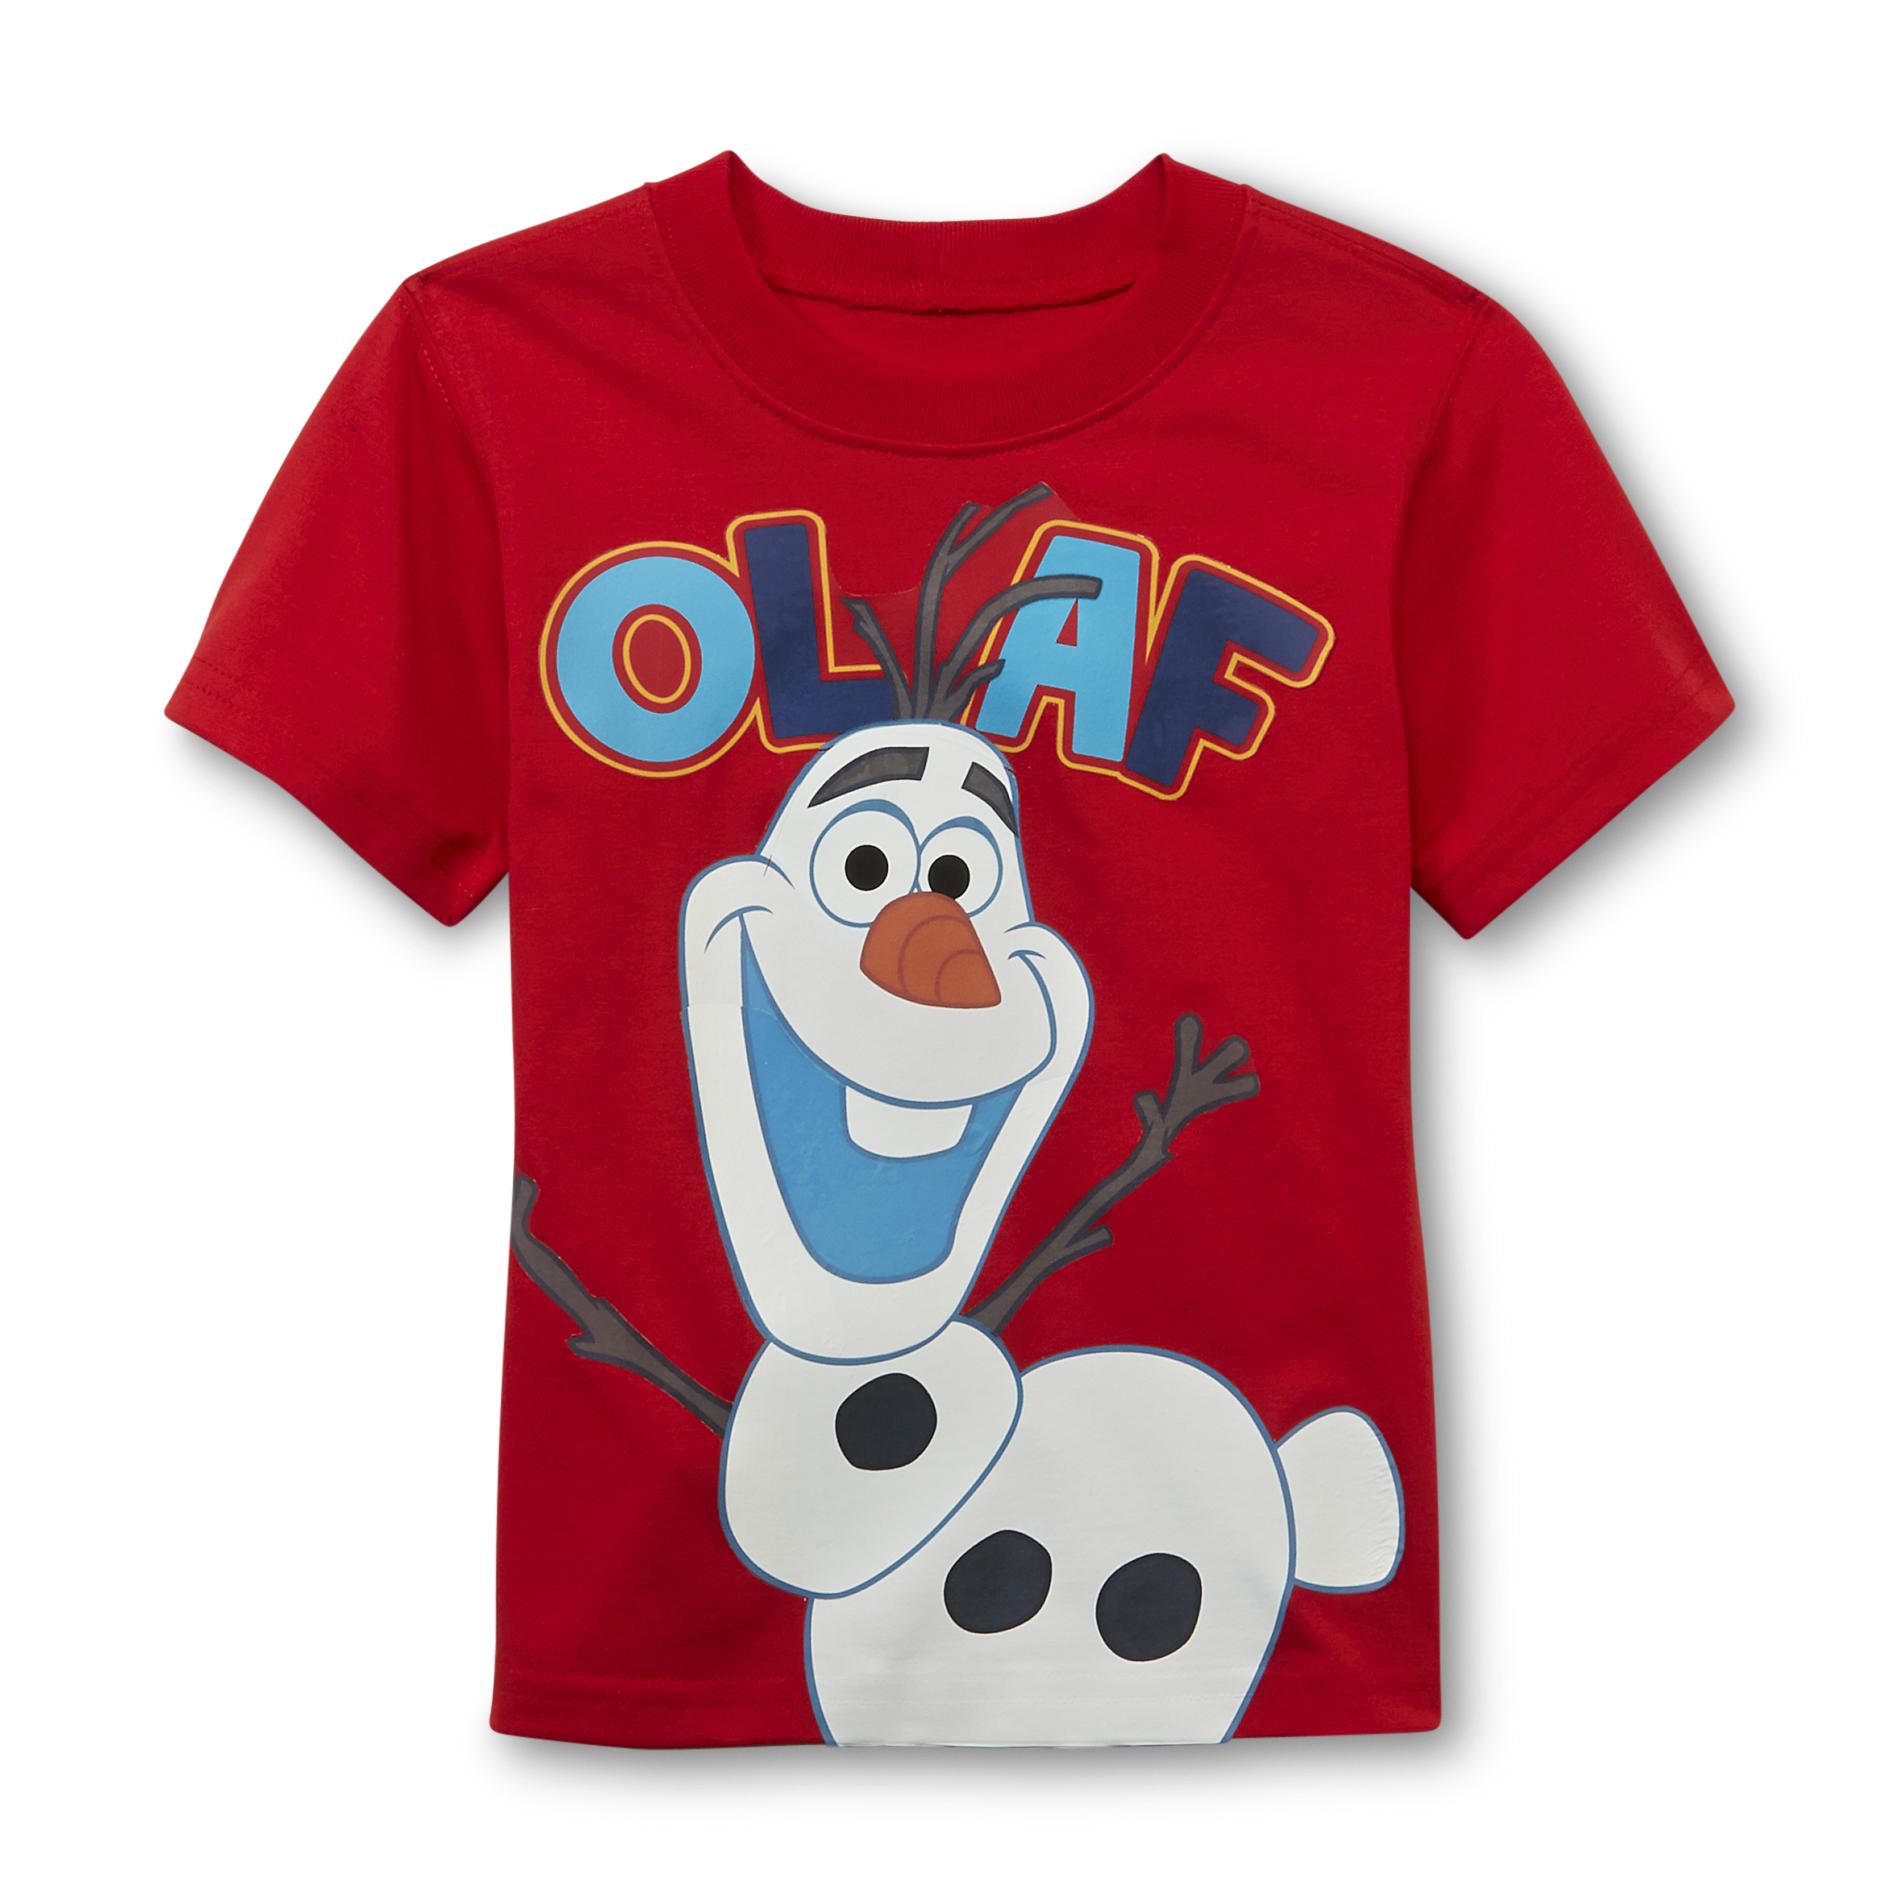 Disney Frozen Toddler Boy's Graphic T-Shirt - Olaf